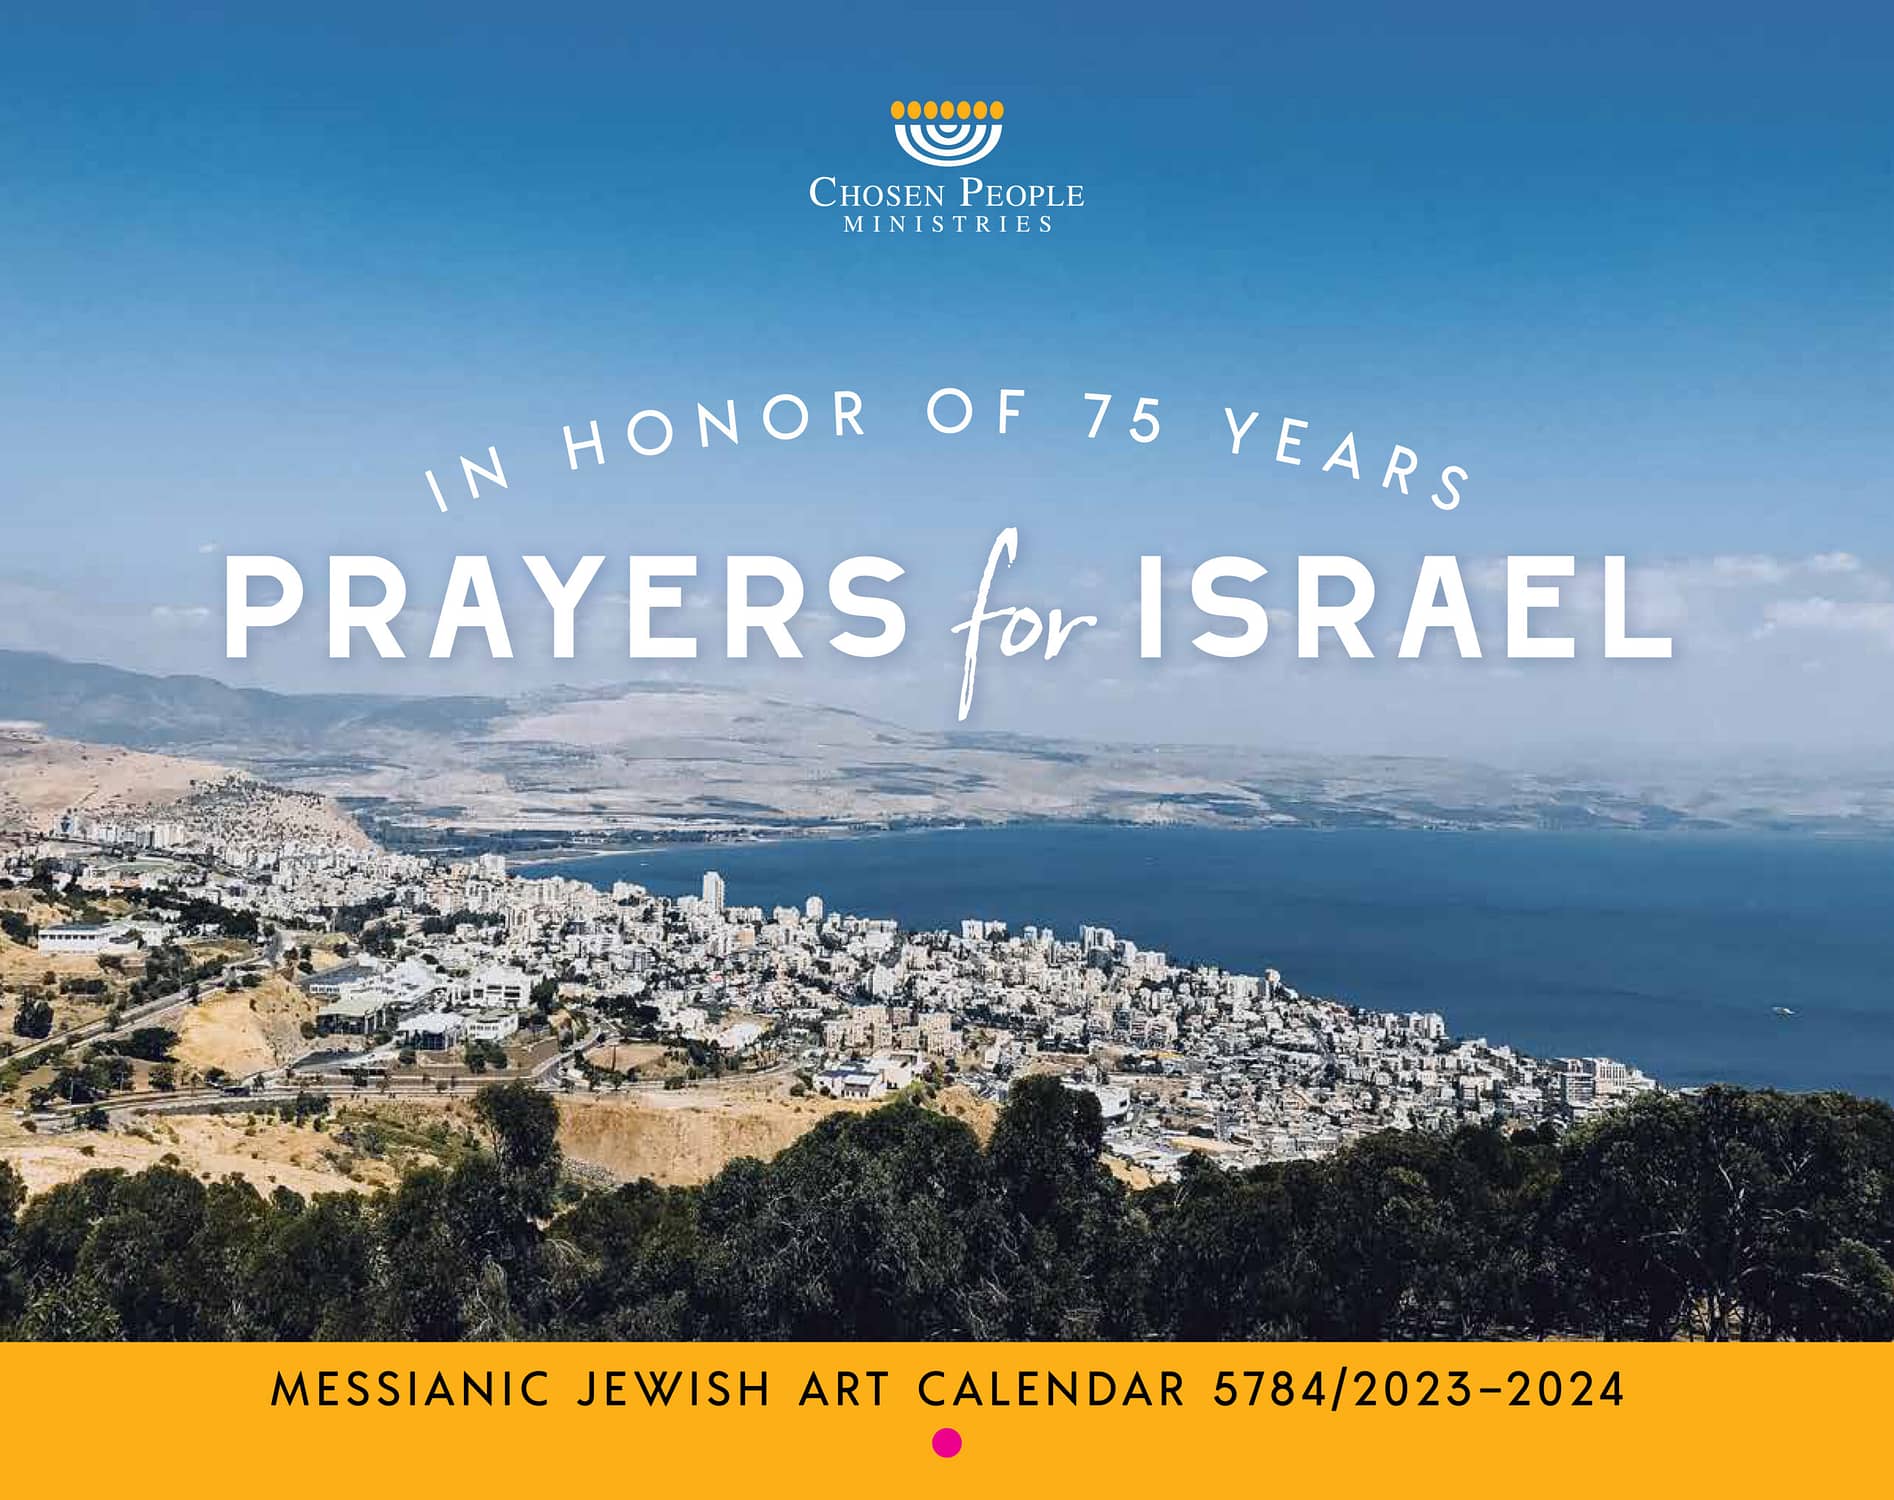 Messianic Jewish Art Calendar 5784 / 2023-2024 - Chosen People Canada Store